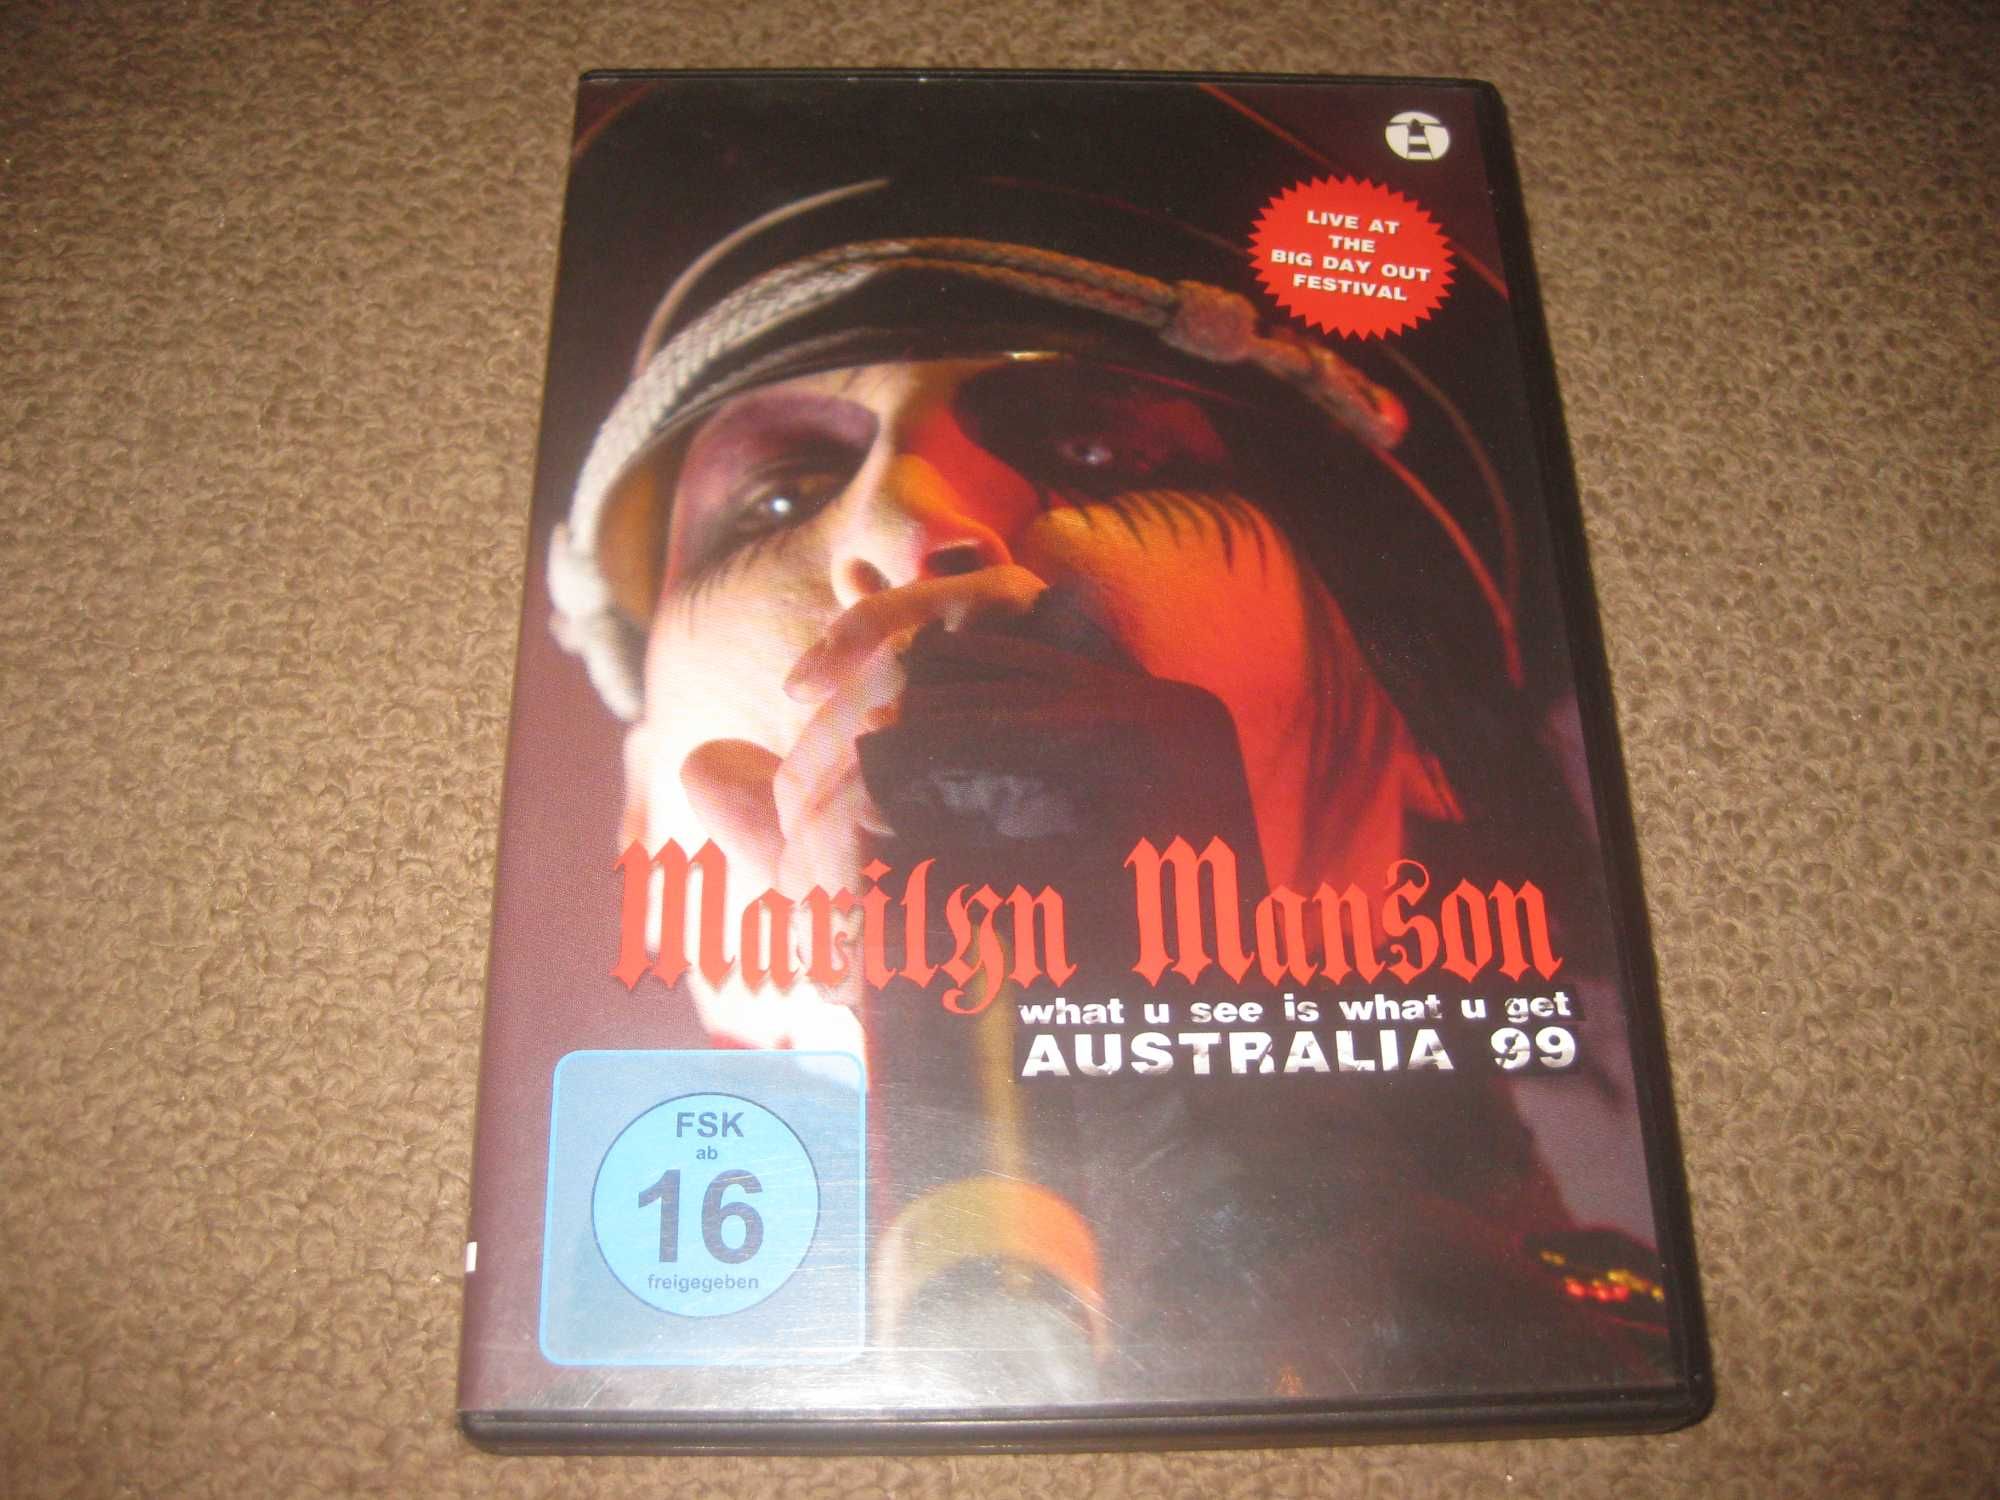 DVD Marilyn Manson "What U See Is What U Get Australia 99" Raríssimo!